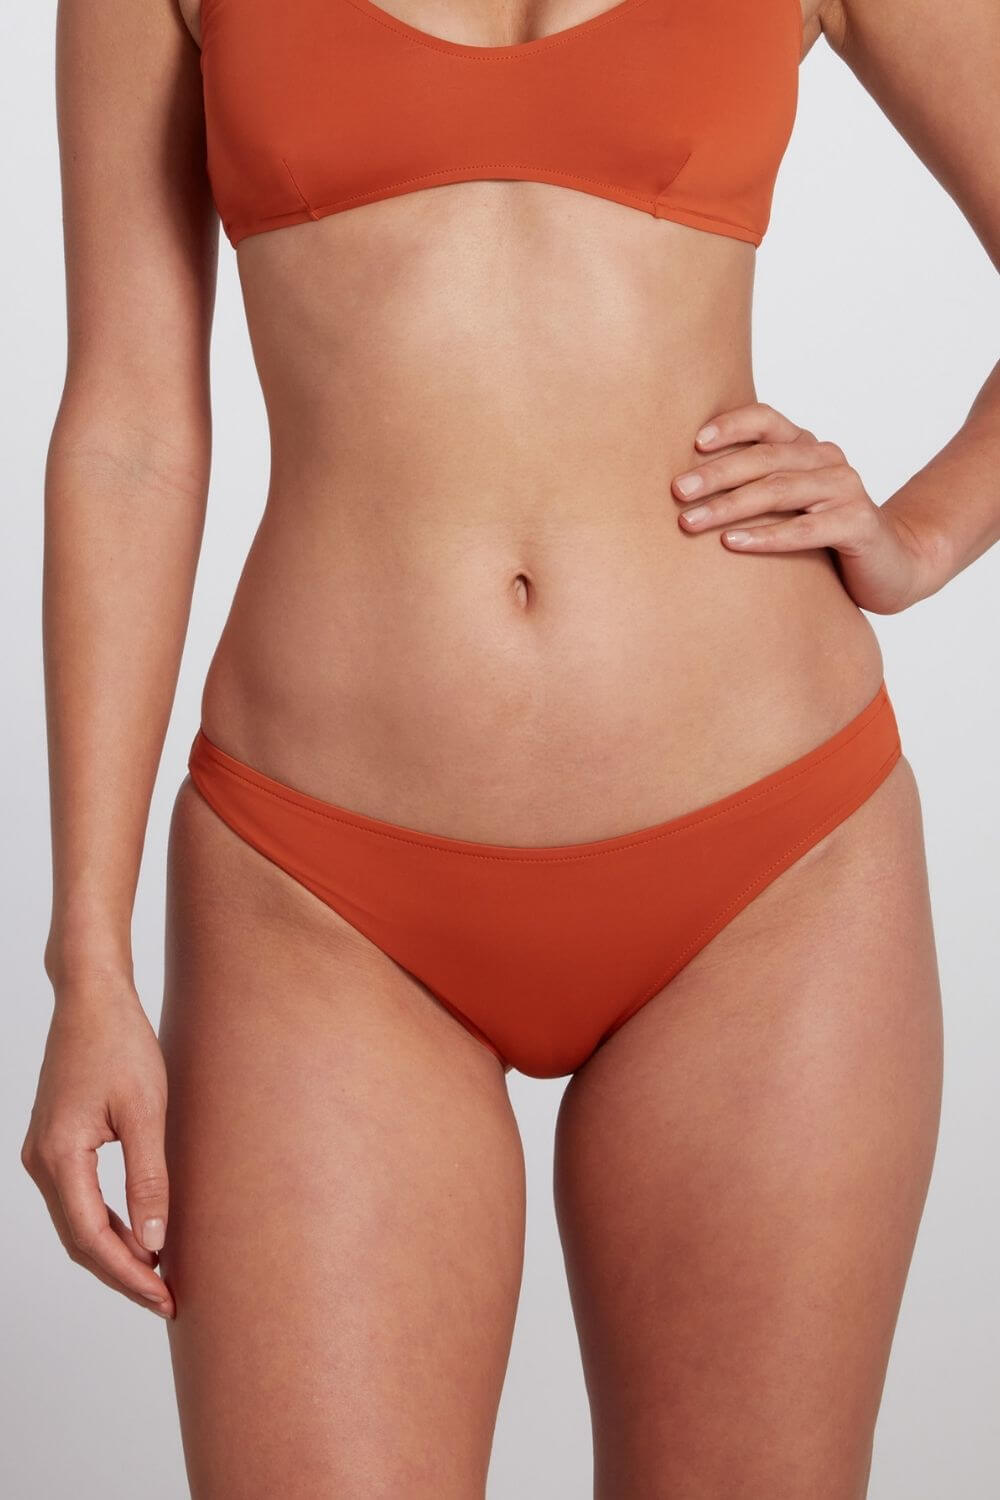 The Jenna classic brief bikini bottom in pumpkin.